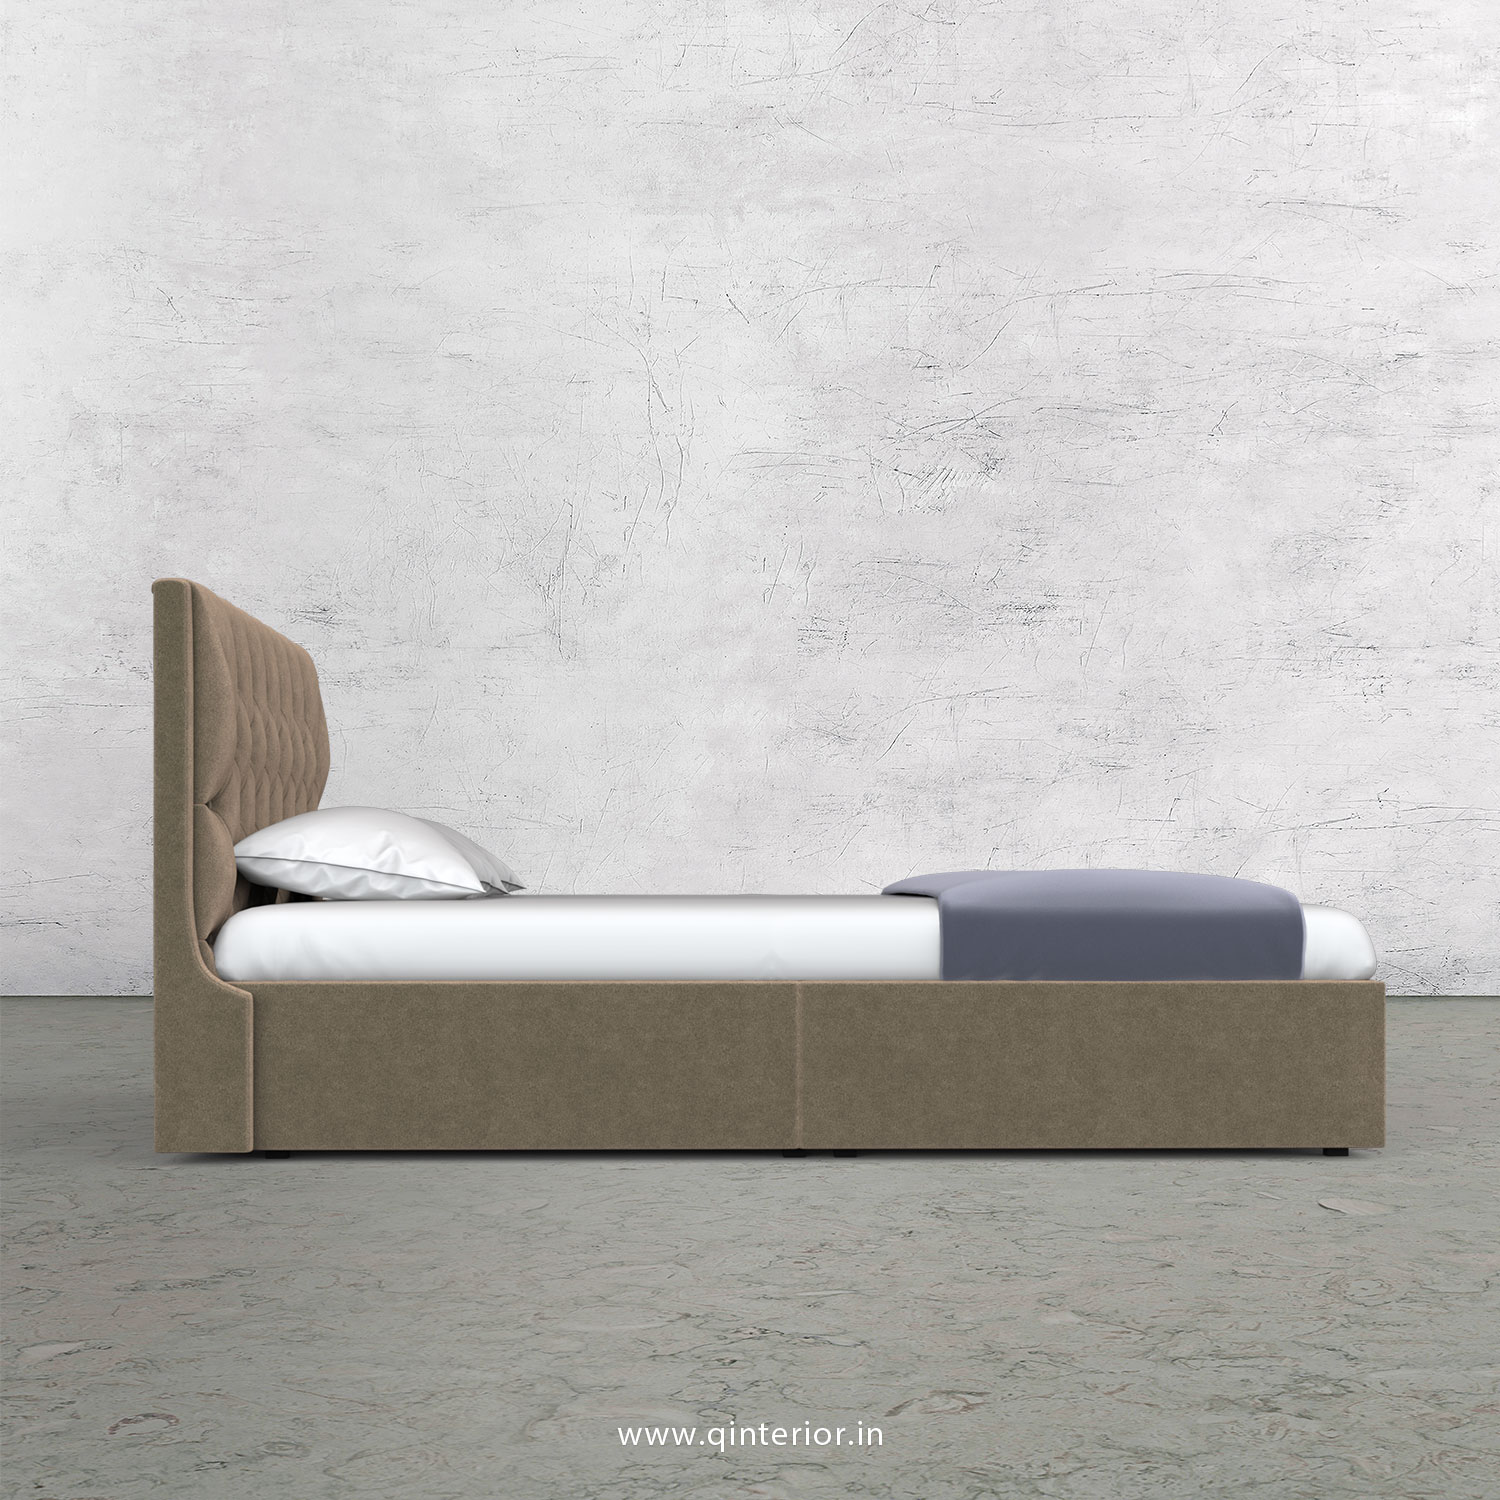 Scorpius King Size Storage Bed in Velvet Fabric - KBD001 VL11